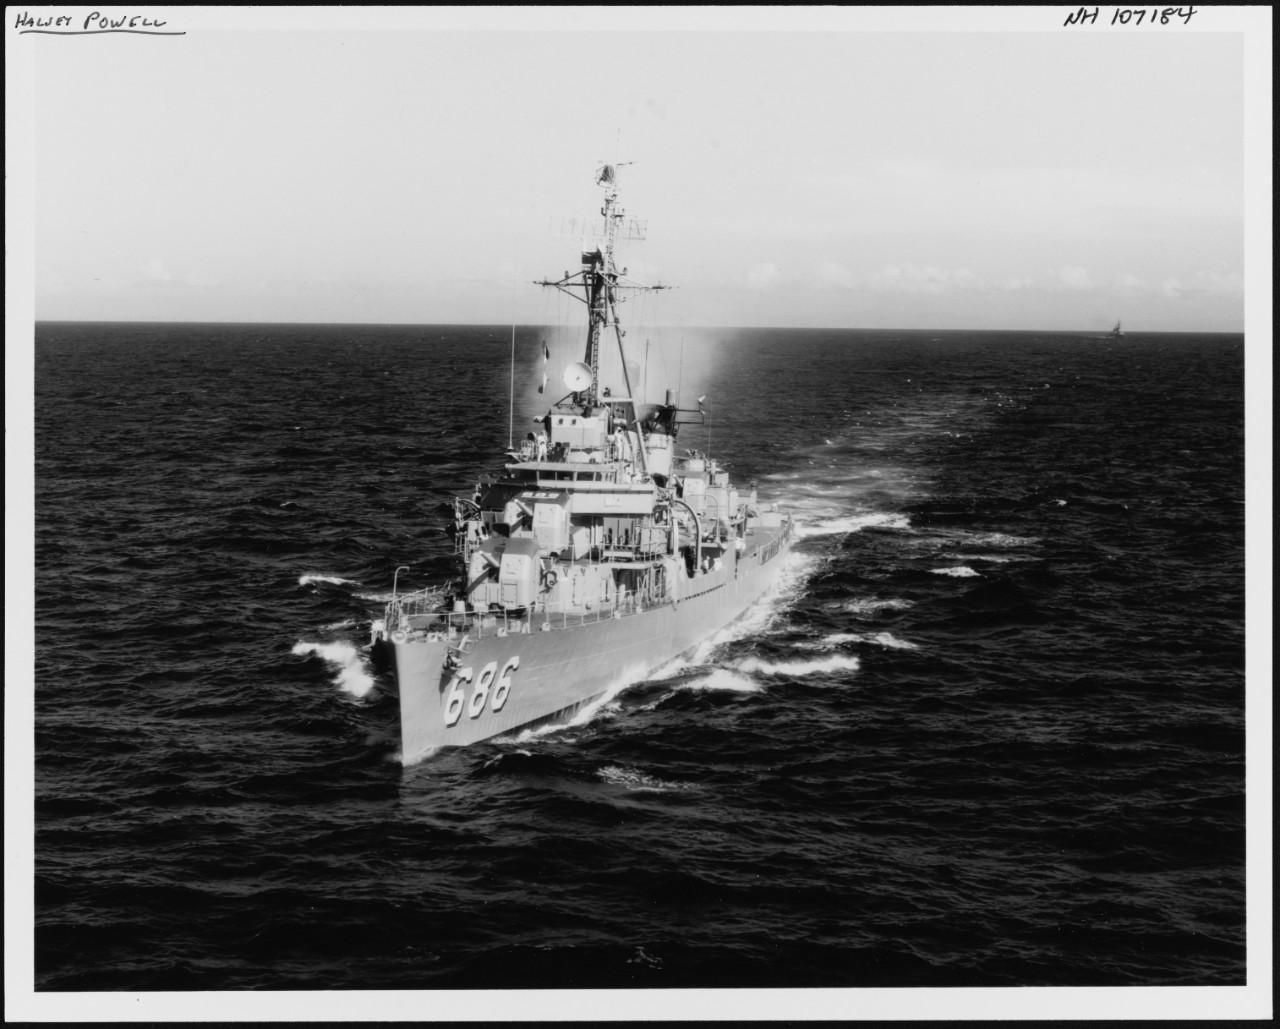 Photo #: NH 107184  USS Halsey Powell